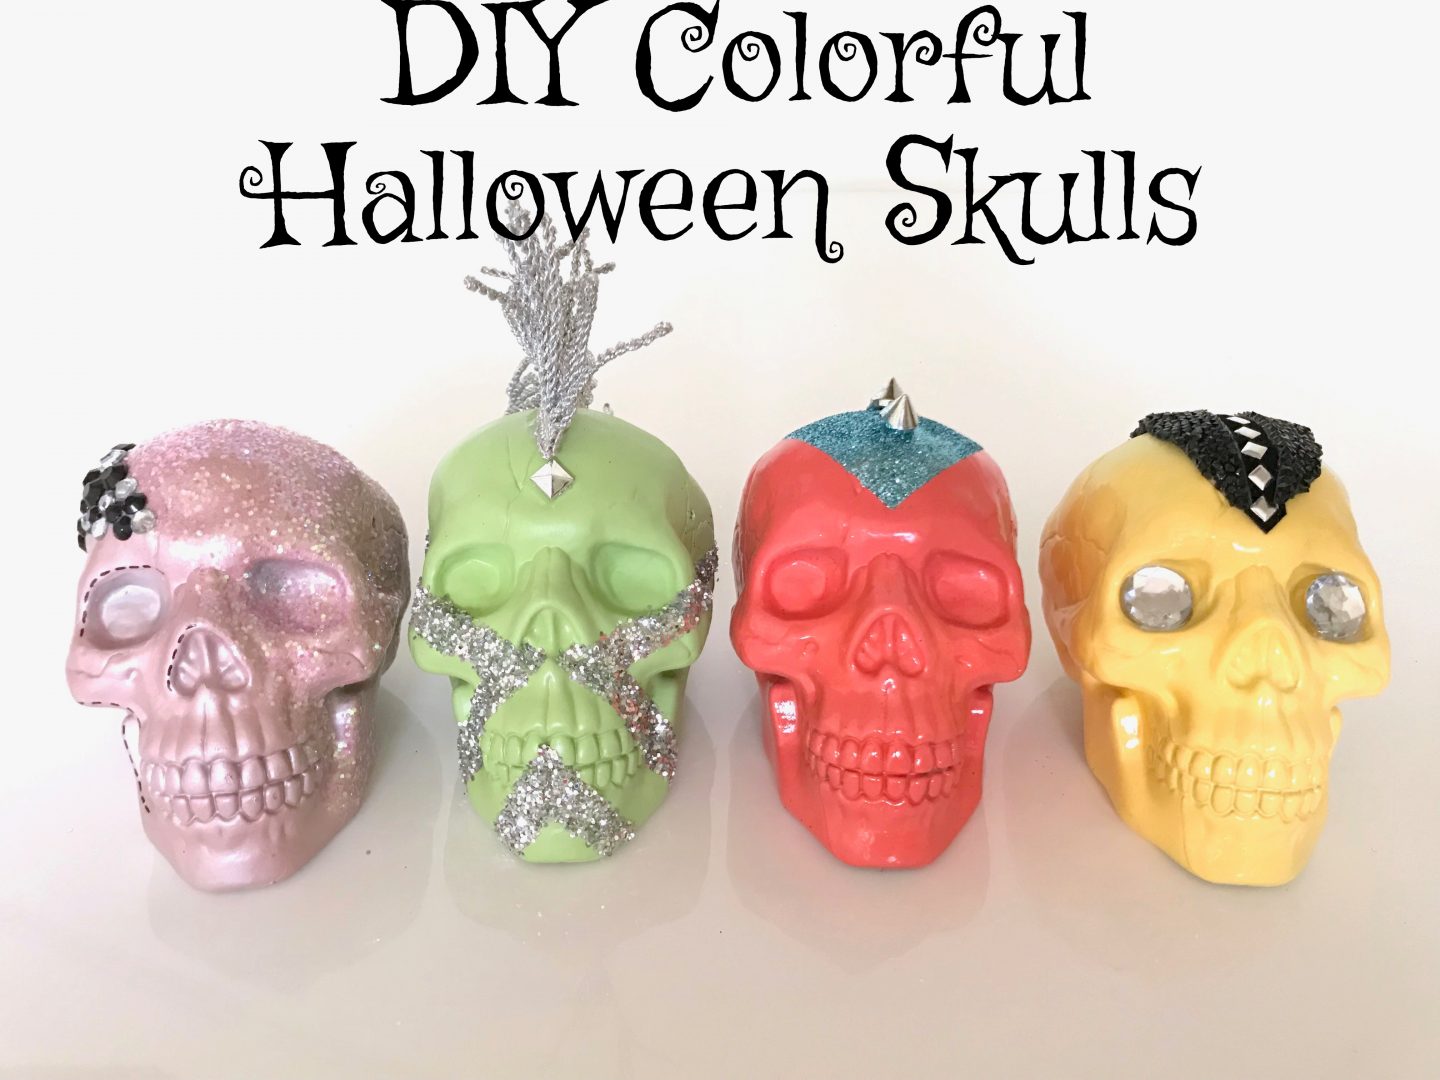 DIY colorful Halloween decor